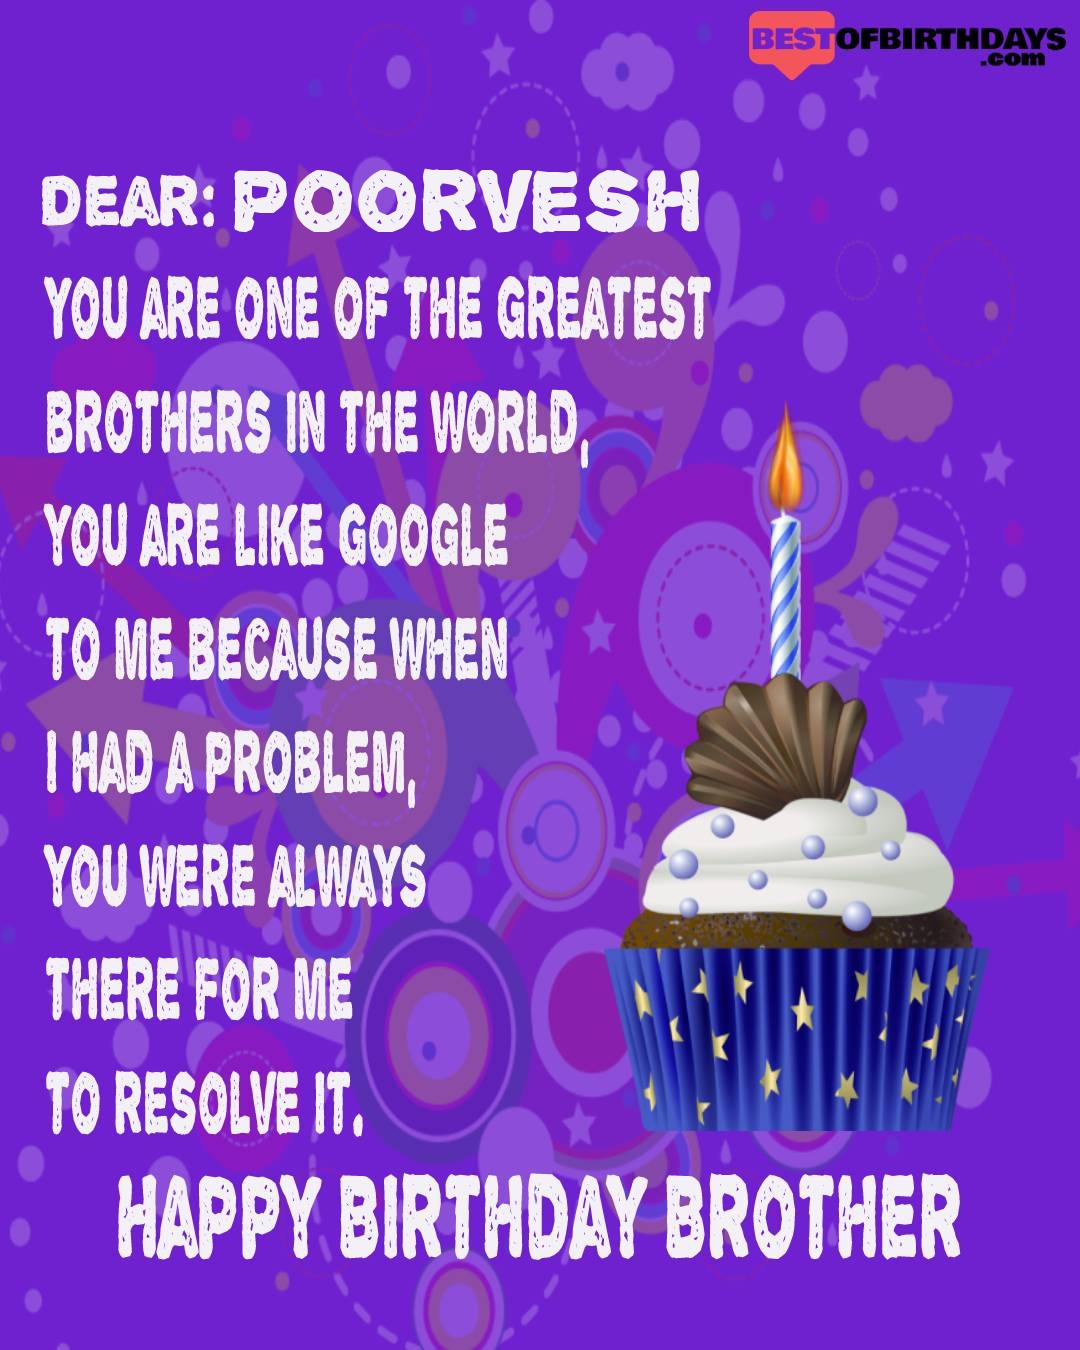 Happy birthday poorvesh bhai brother bro